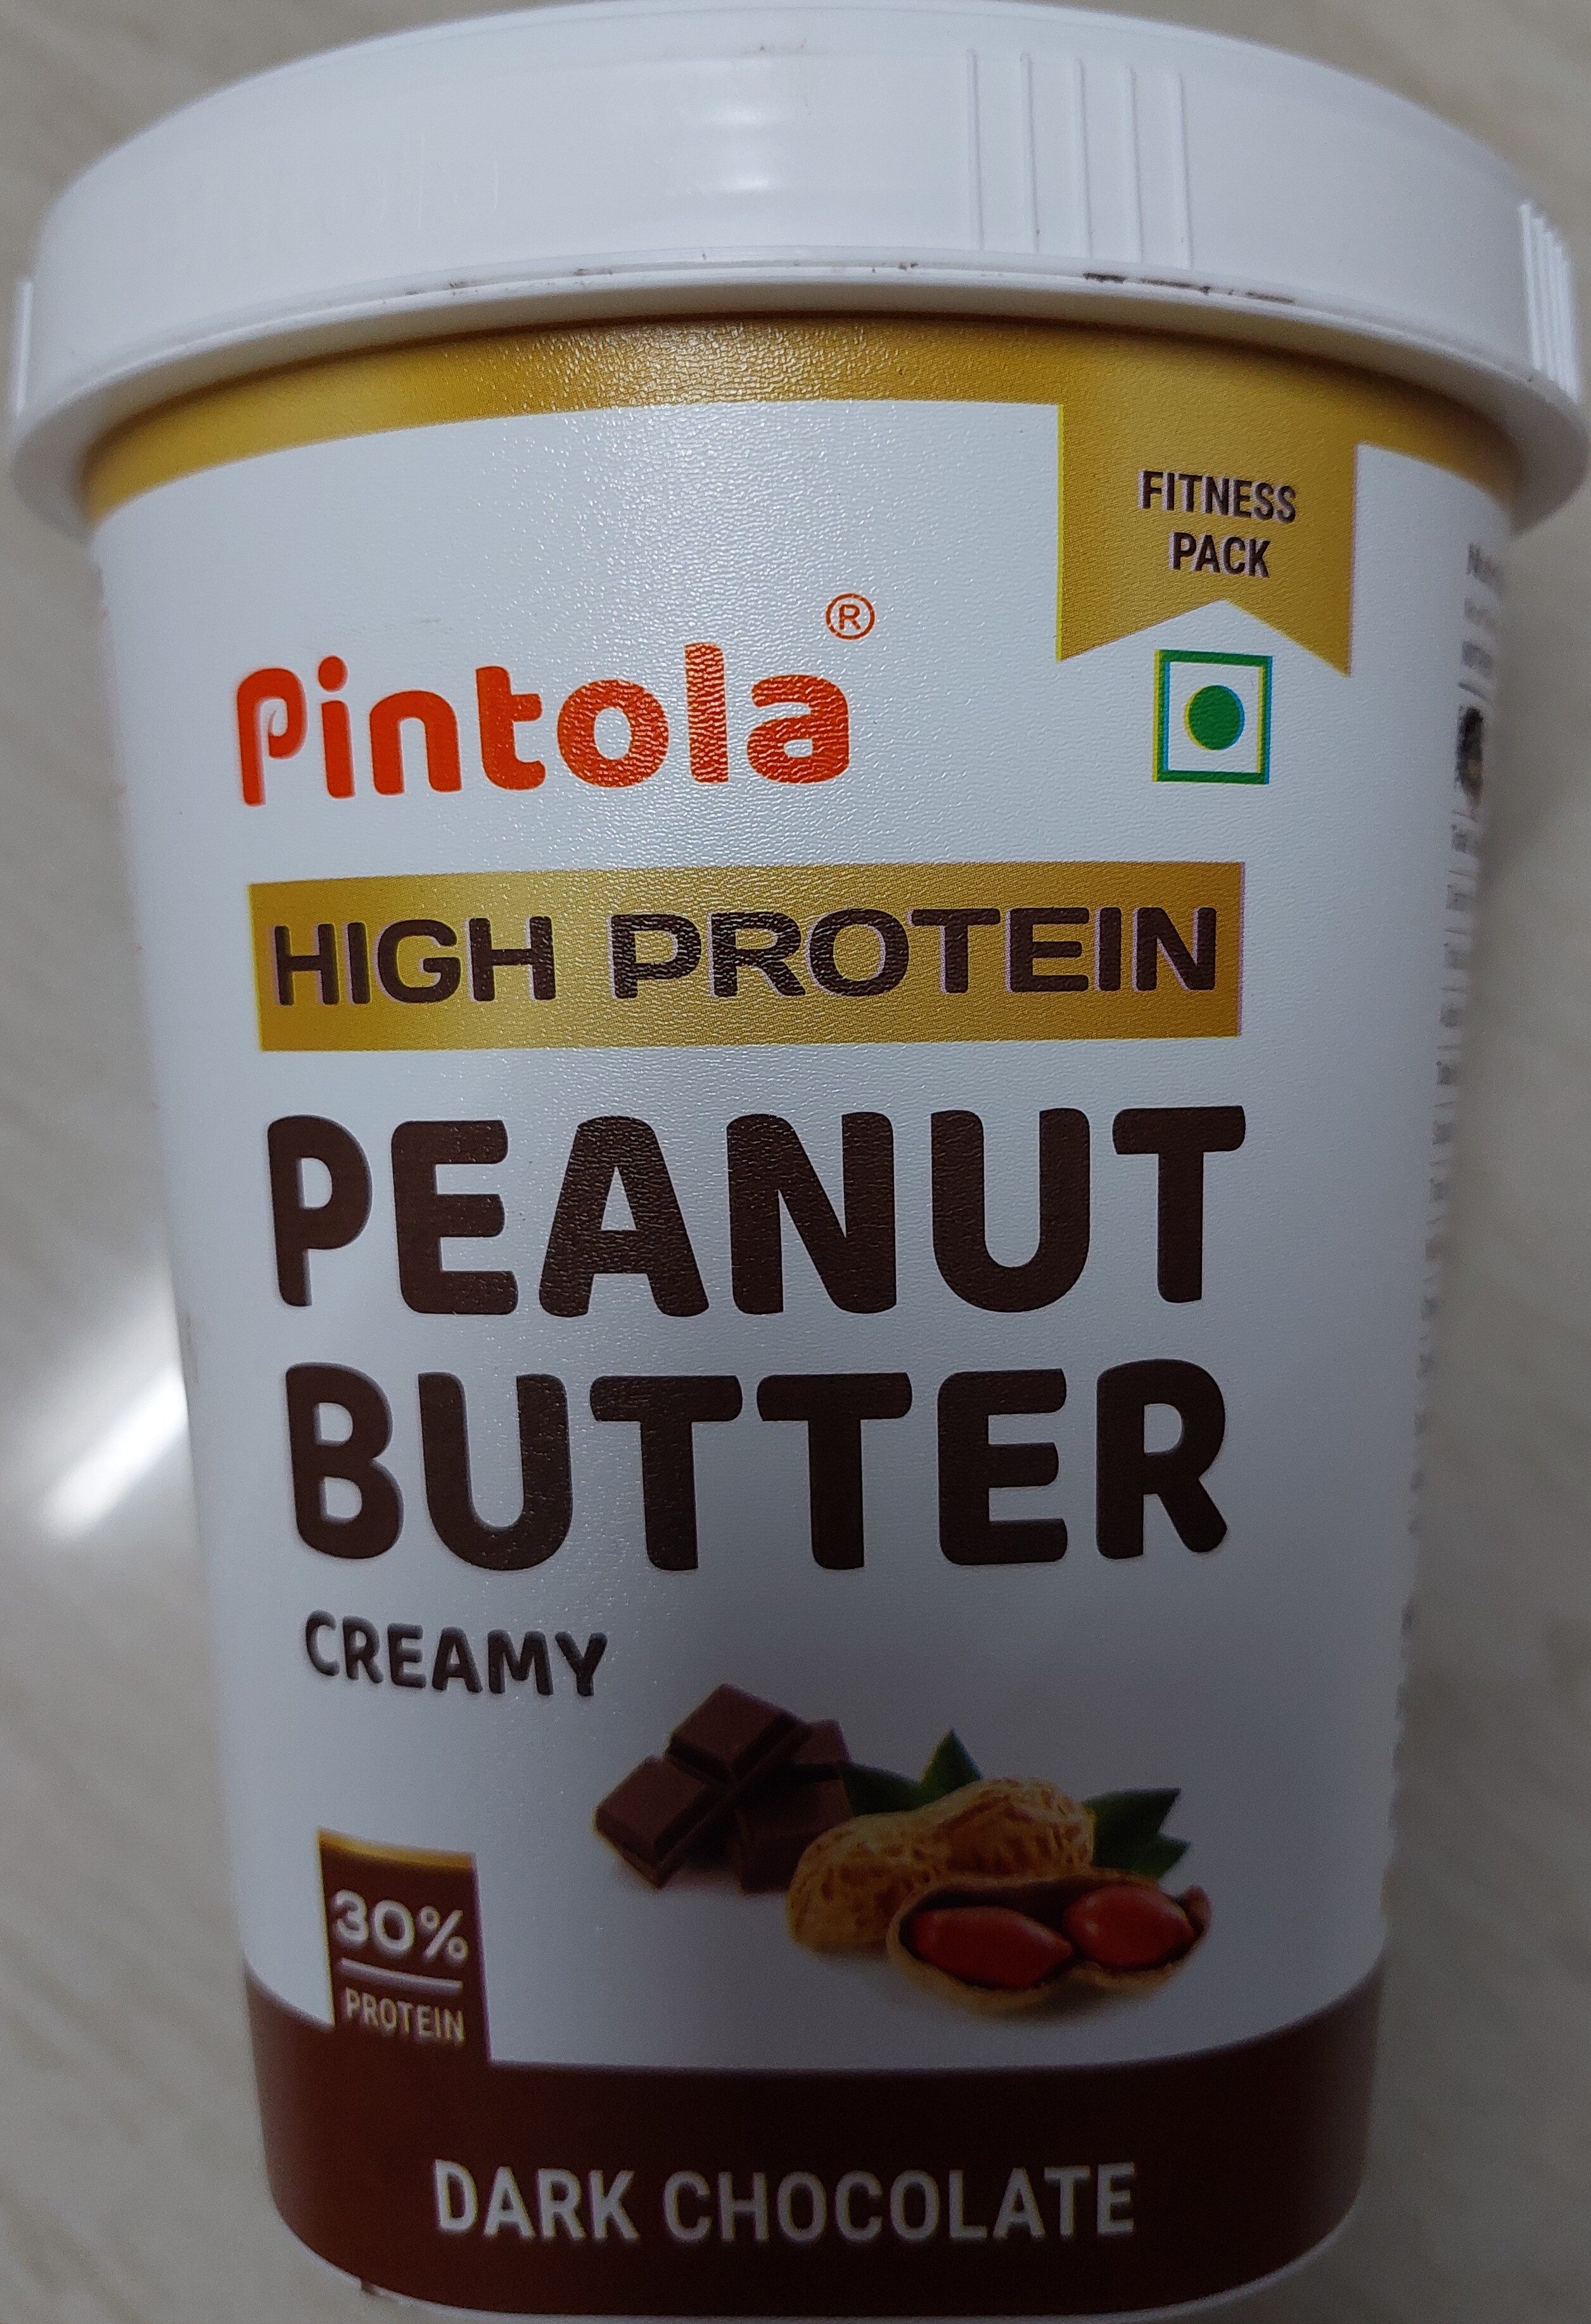 Pintola High Protien Peanut Butter - Product